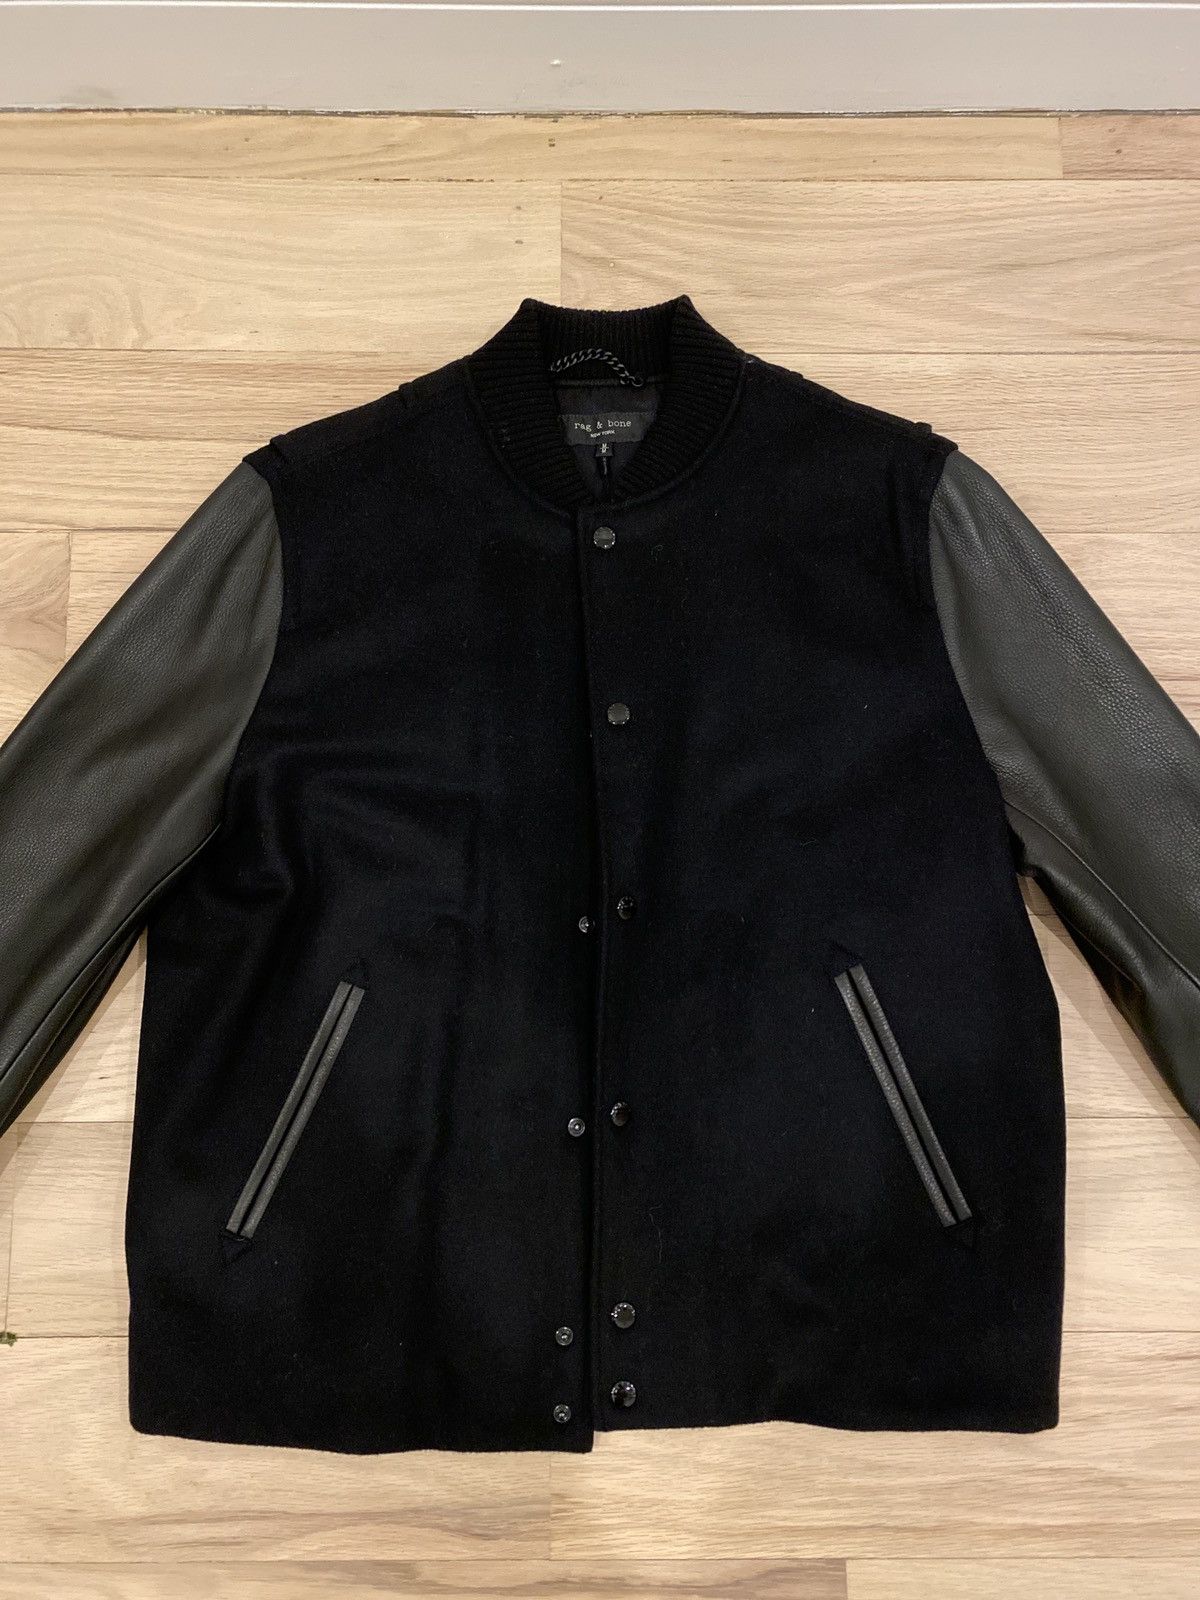 Rag & Bone Rag and Bone Black Varsity Jacket Wool and Leather | Grailed